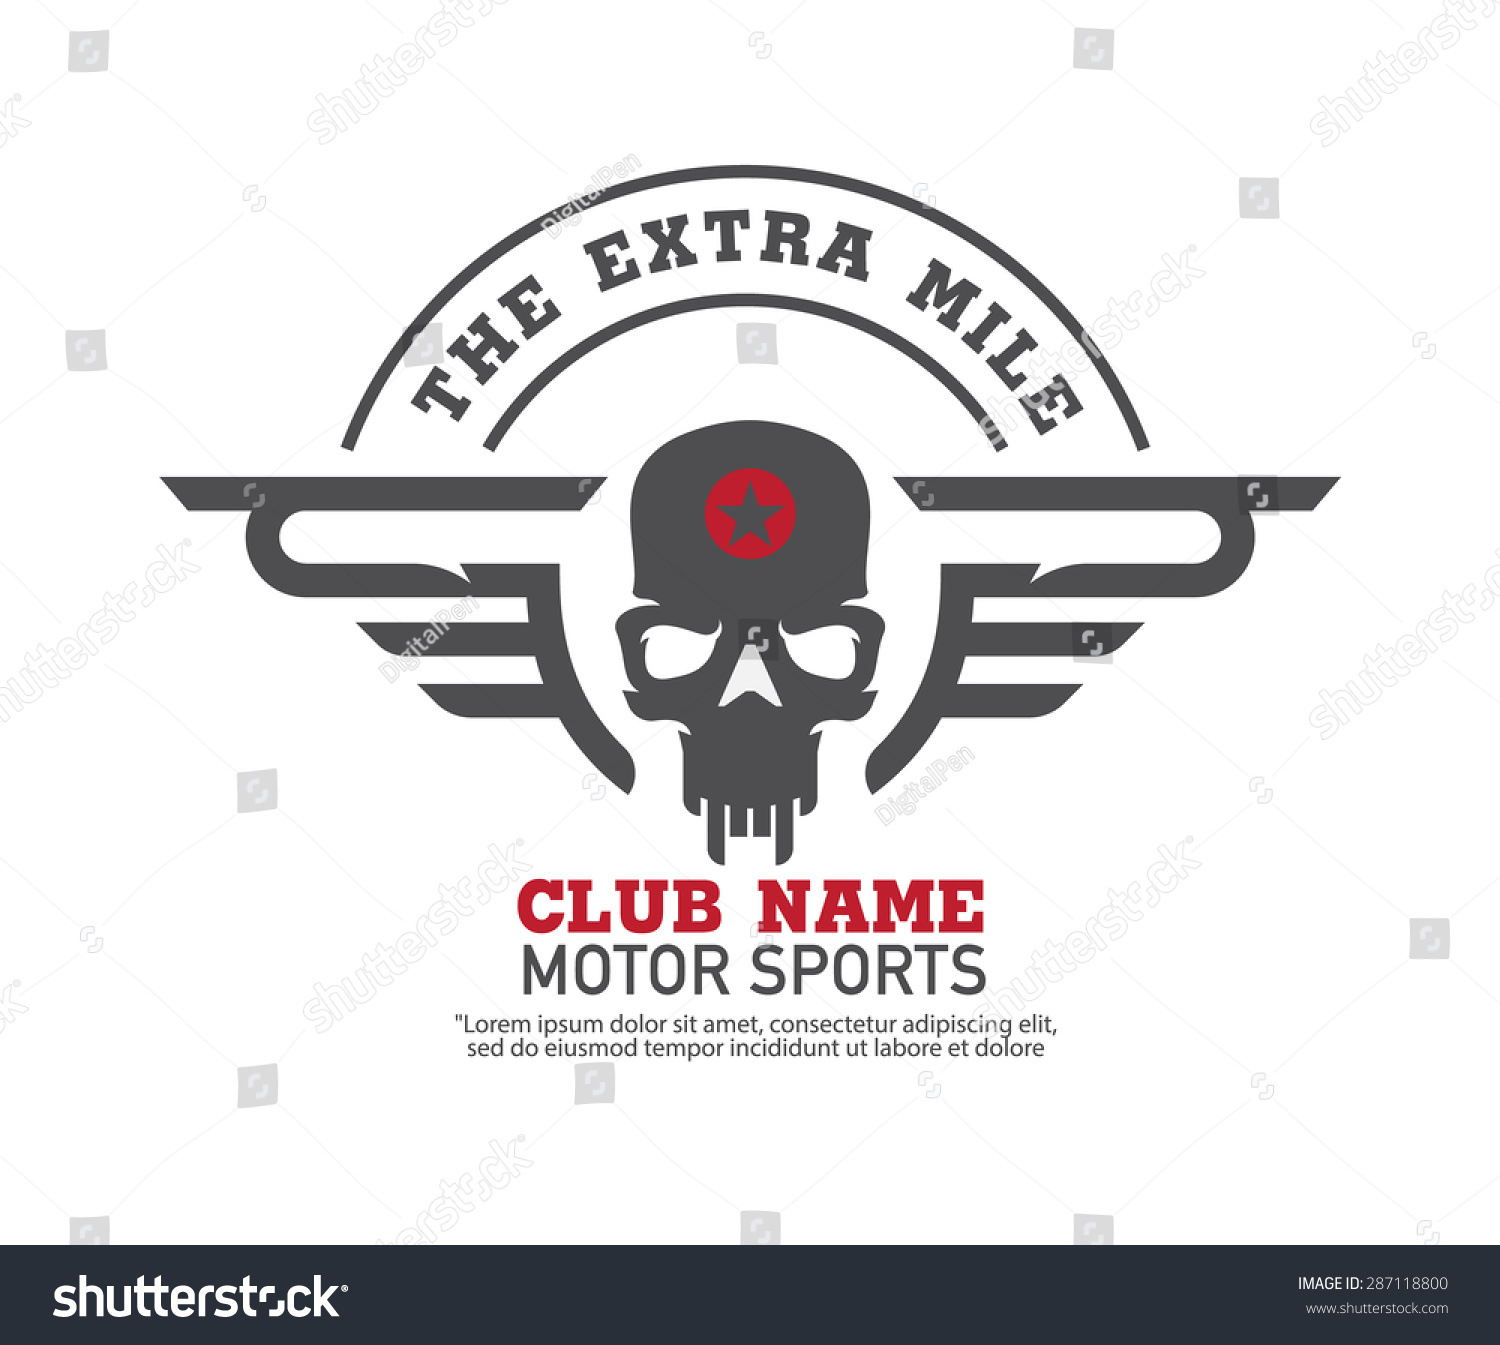  Desain Logo Club Motor Keren